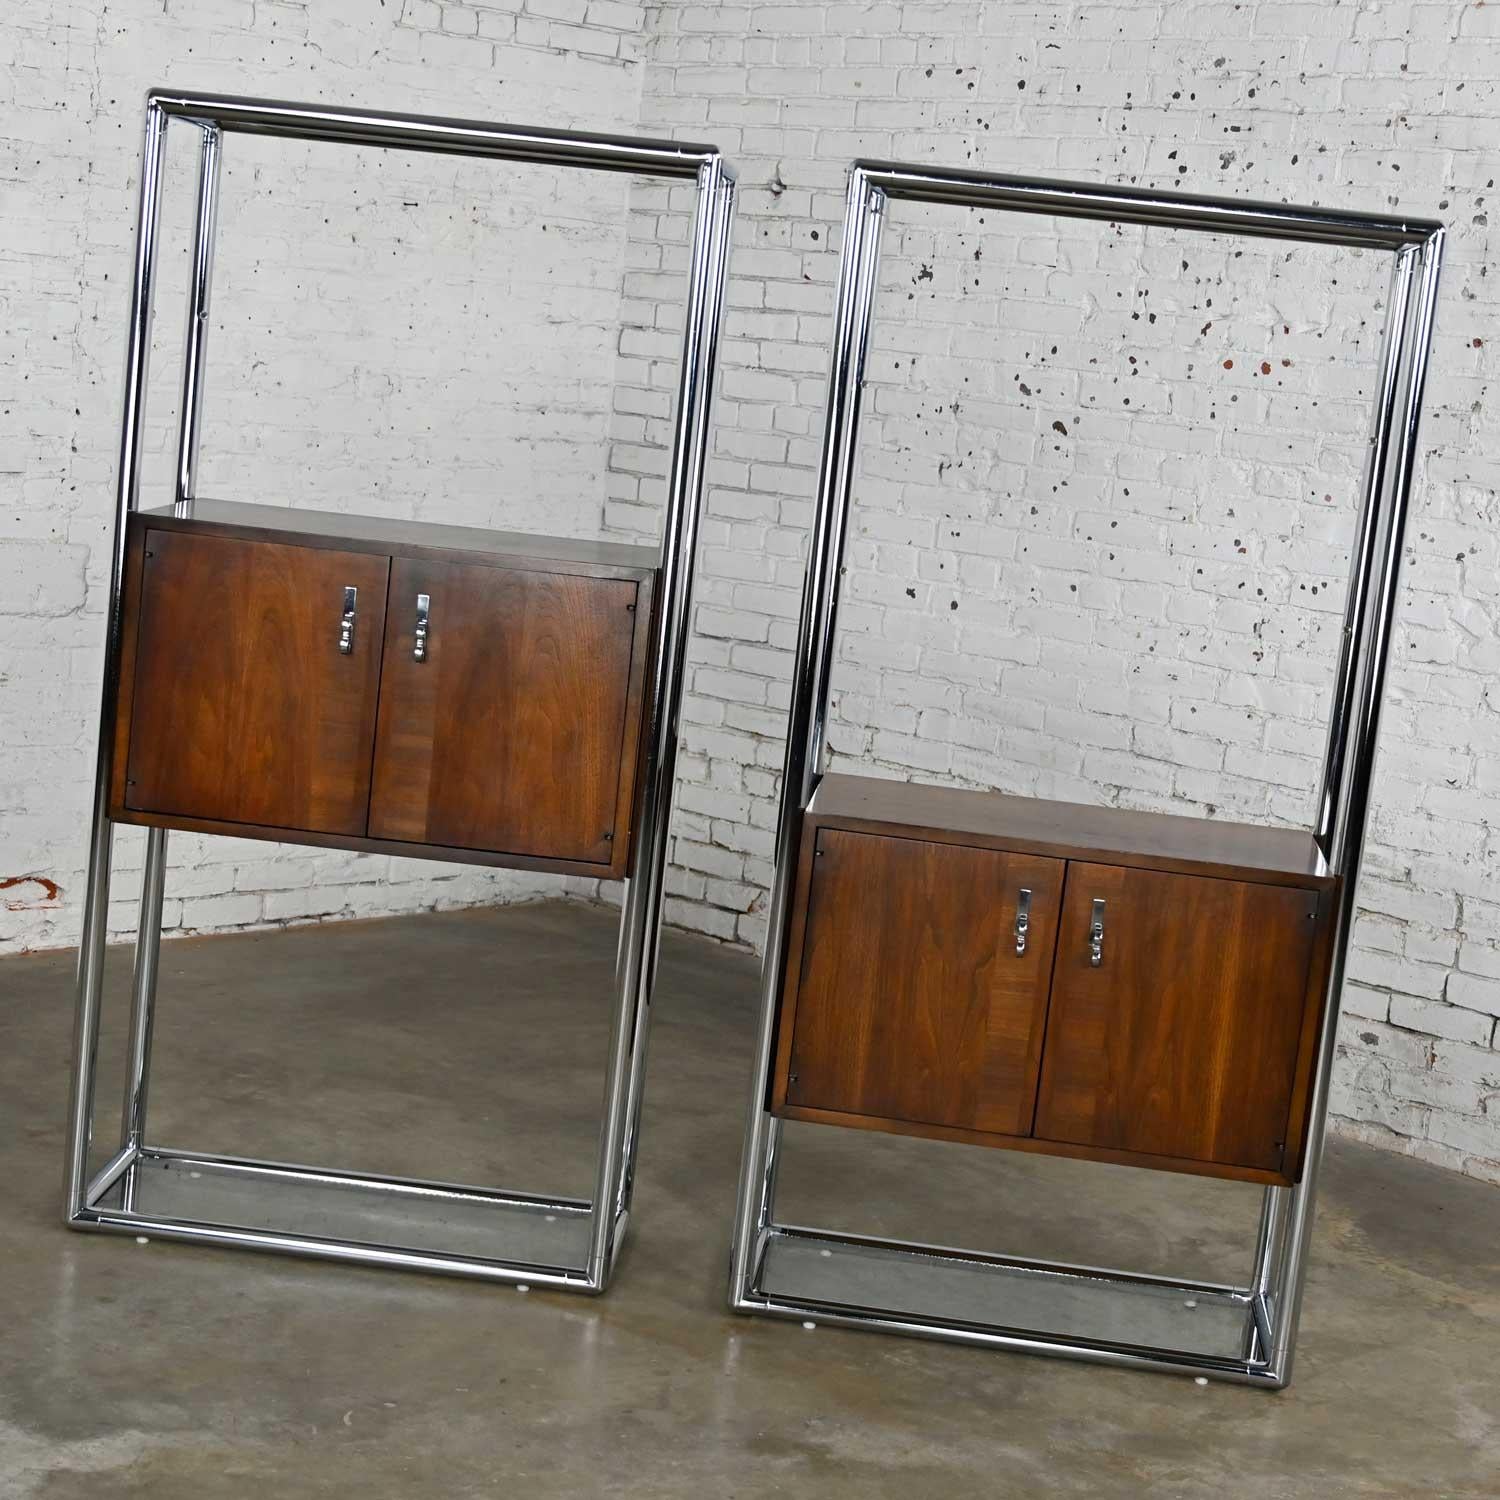 Glass MCM Chrome & Walnut Veneer Display Cabinet or Room Divider 3 Piece Unit by Lane